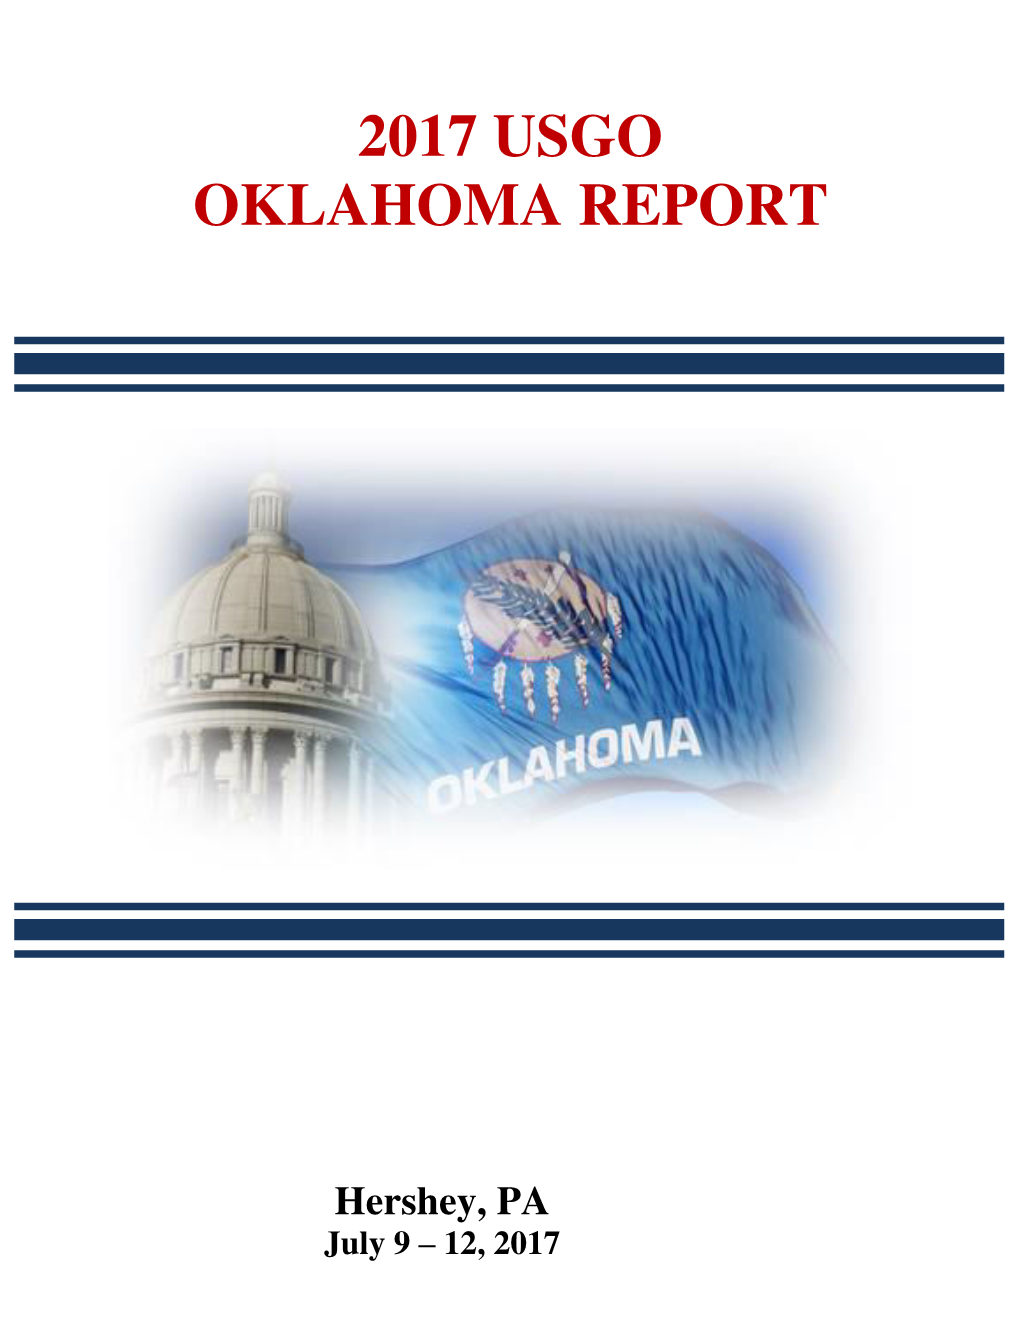 2017 Usgo Oklahoma Report